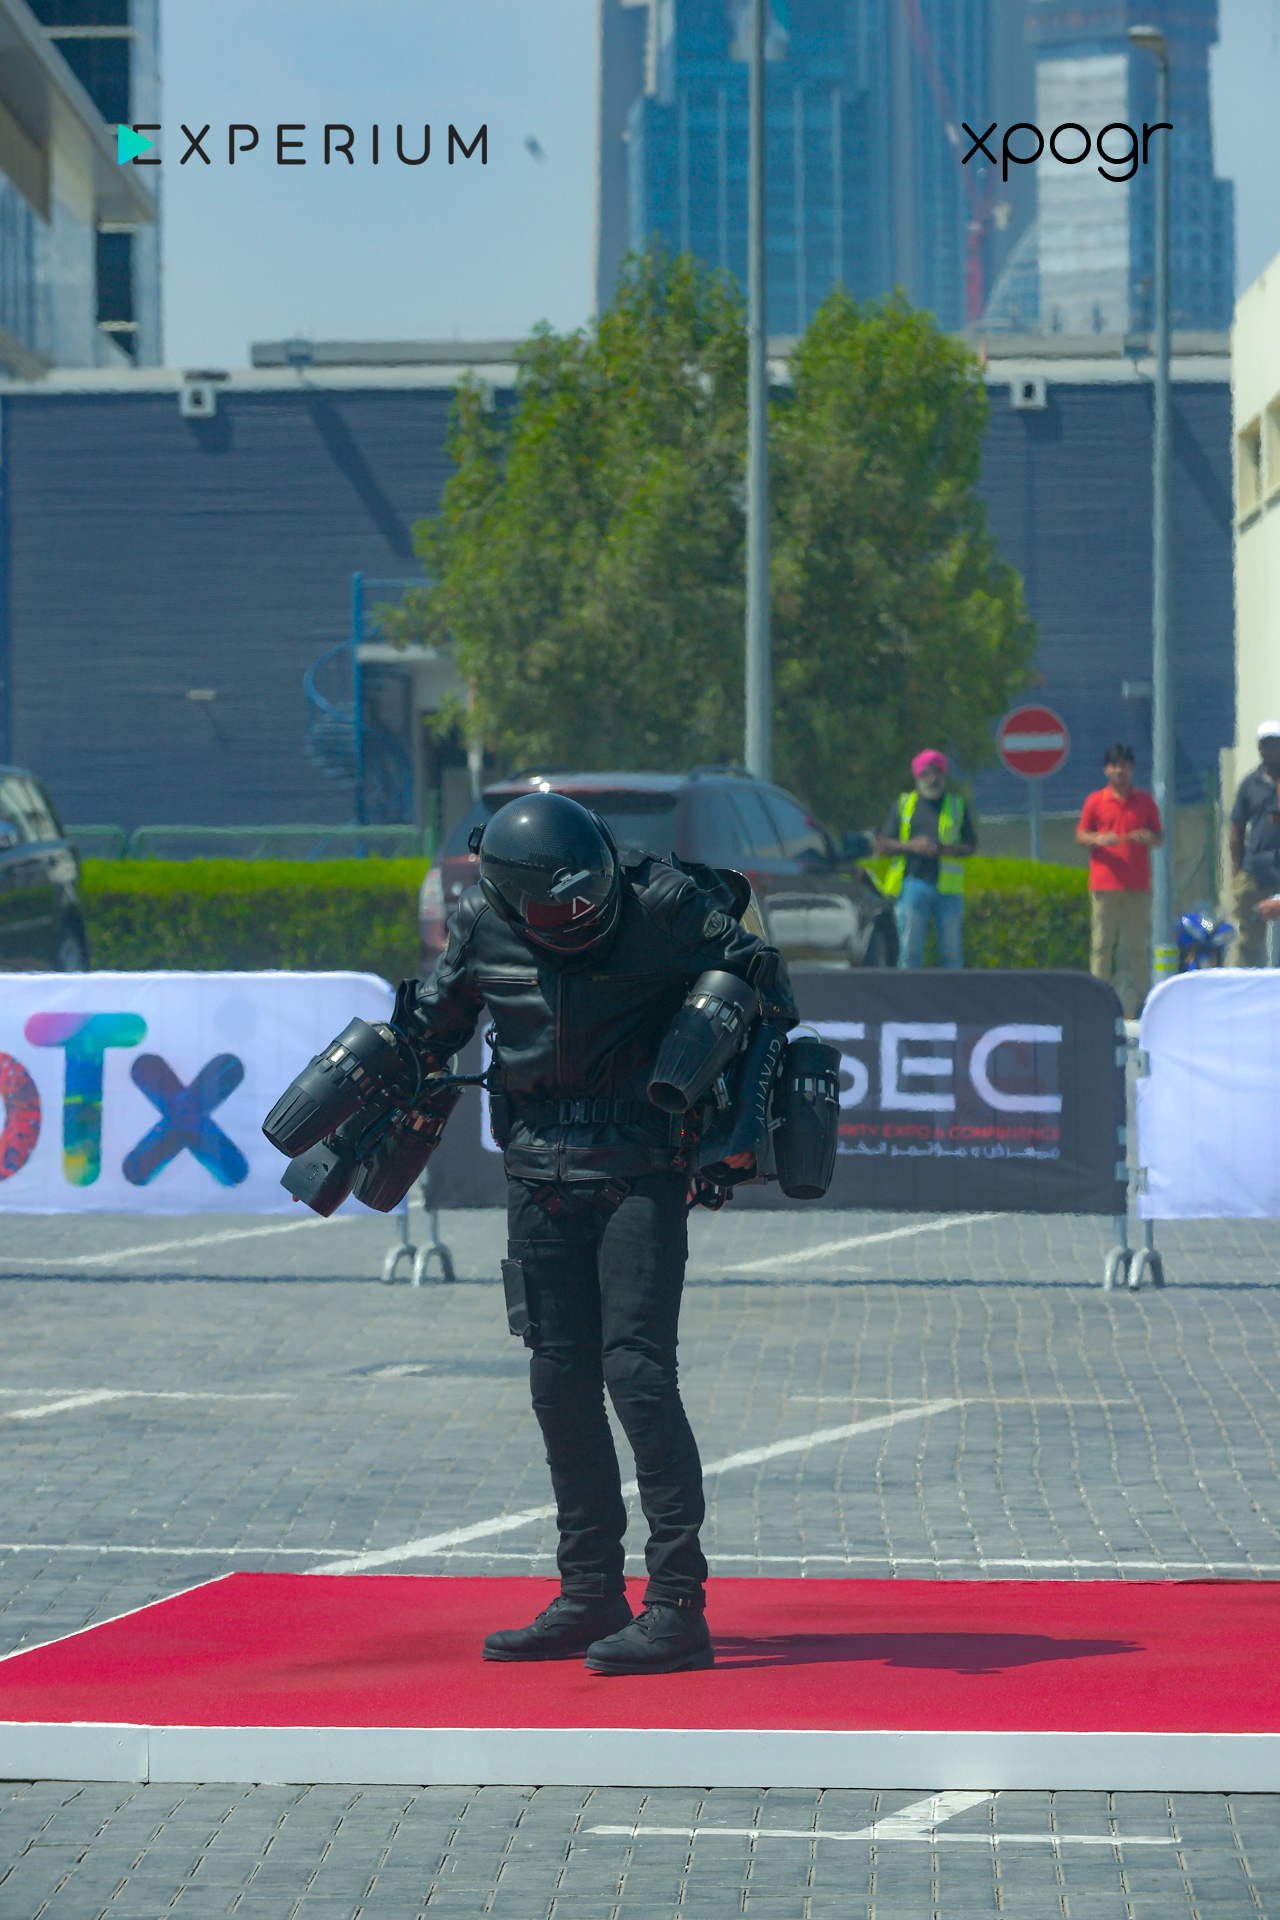 Real-life Iron Man takes flight in Dubai with xpogr